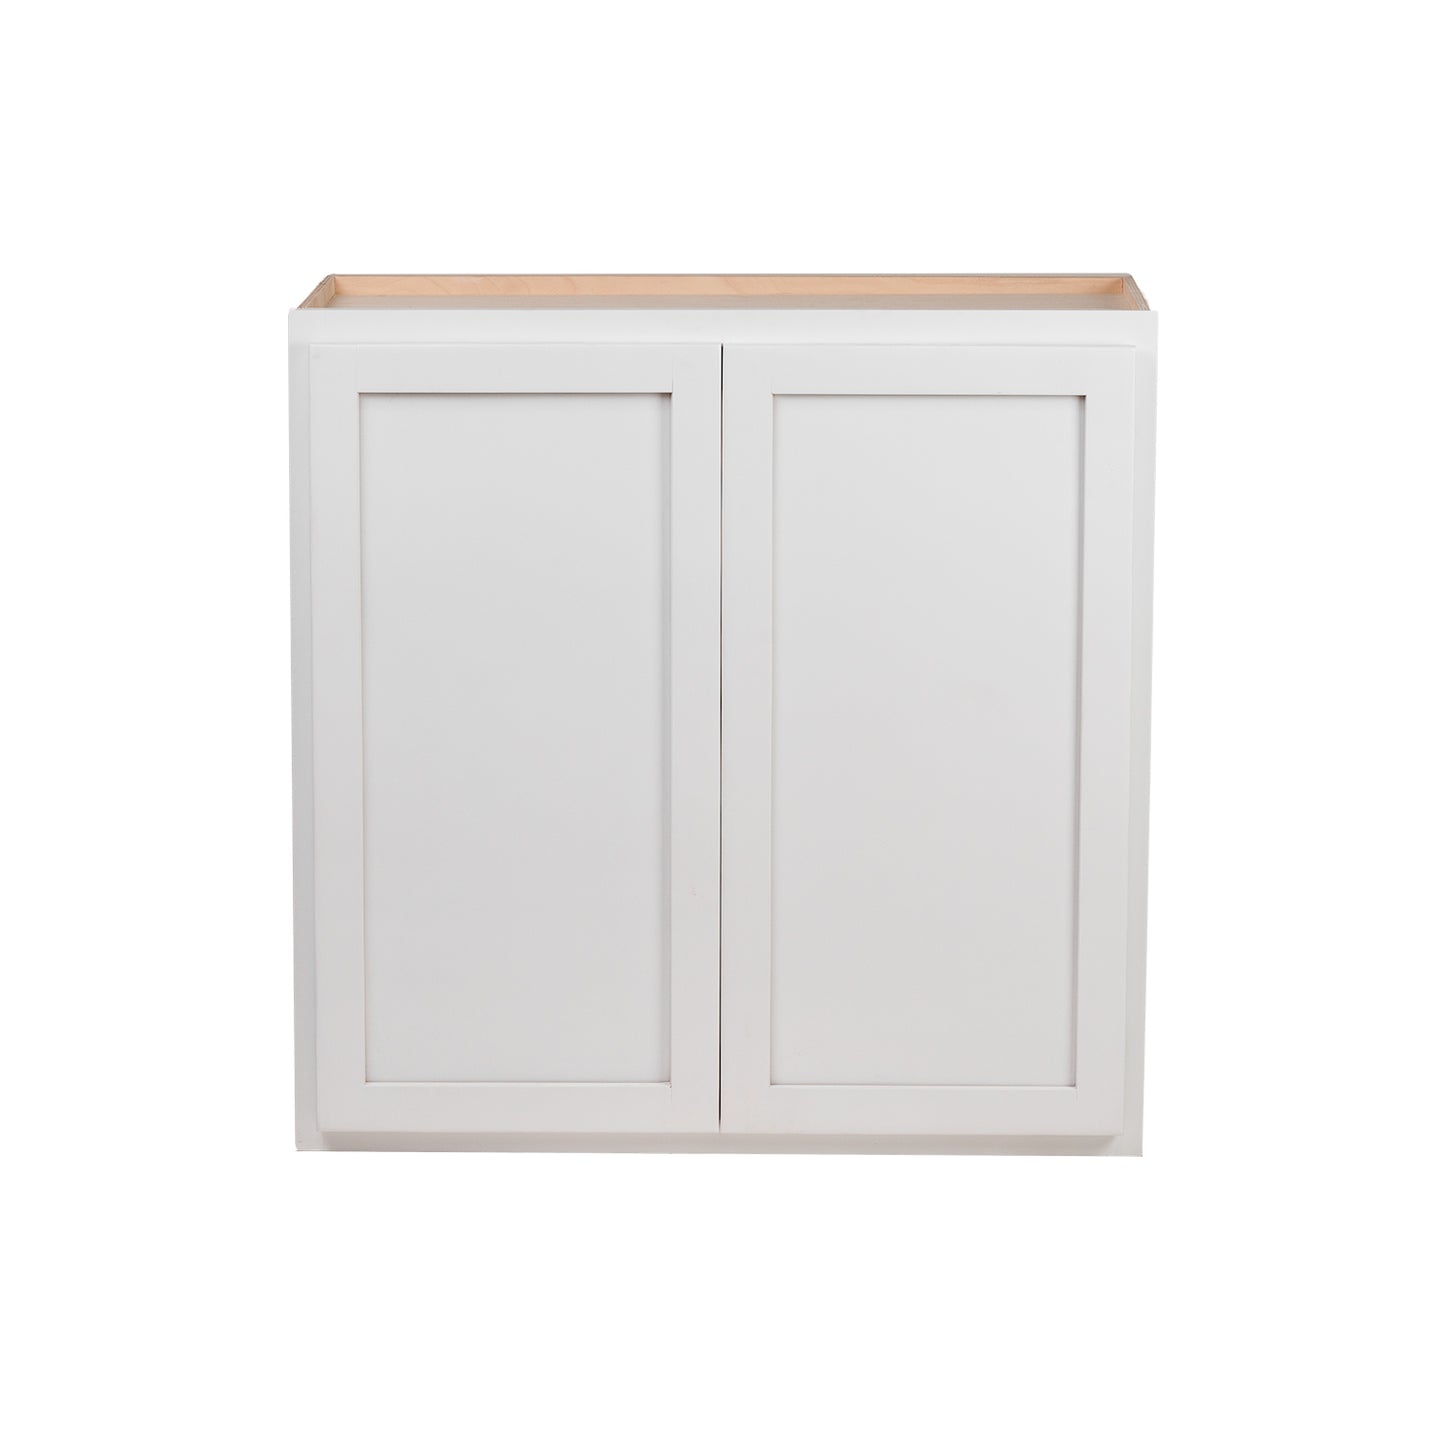 Quicklock RTA (Ready-to-Assemble) Pure White 36"Wx42"Hx12"D Wall Cabinet